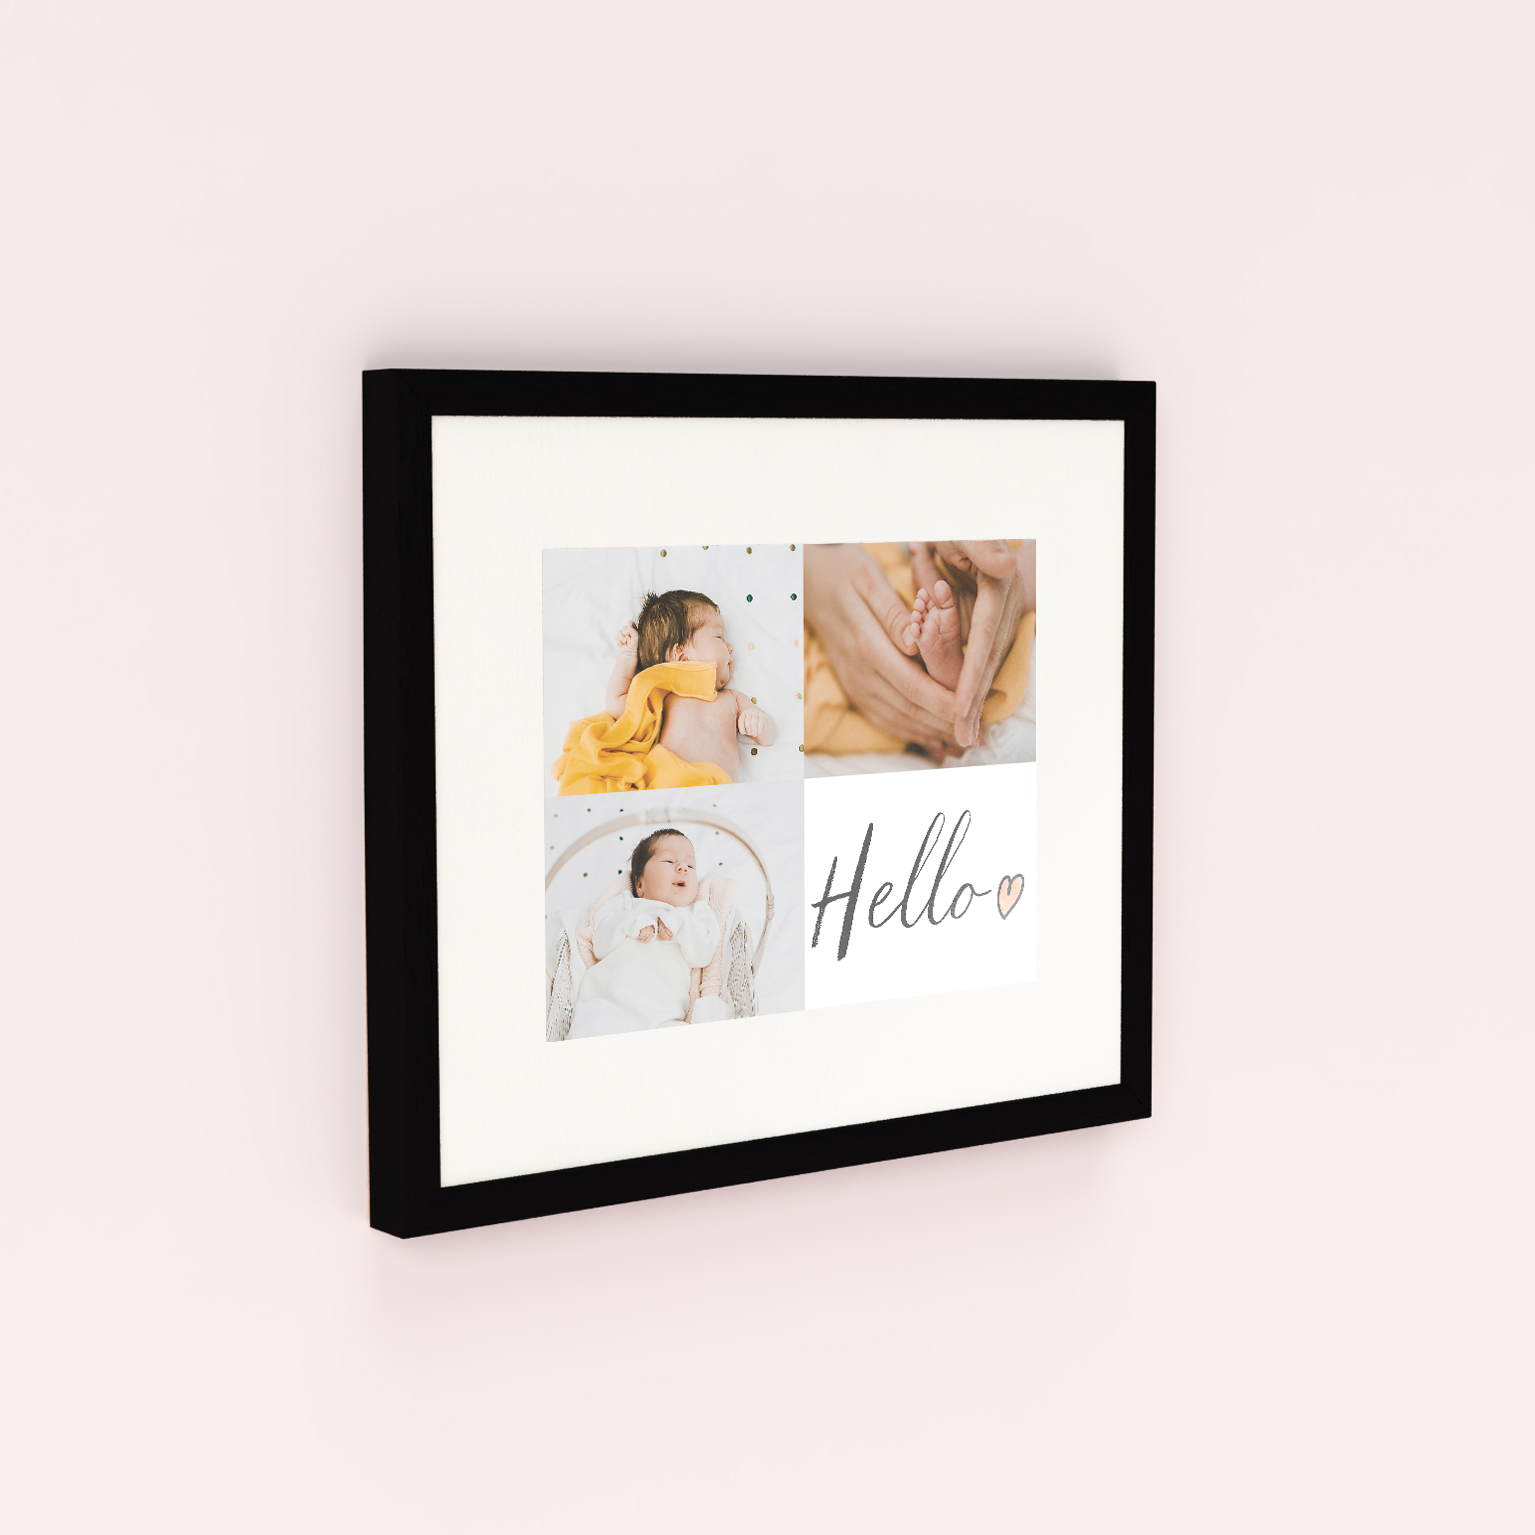 Triple Play Hello Framed Photo Print - Celebrate joy with a versatile gift holding three cherished photos.